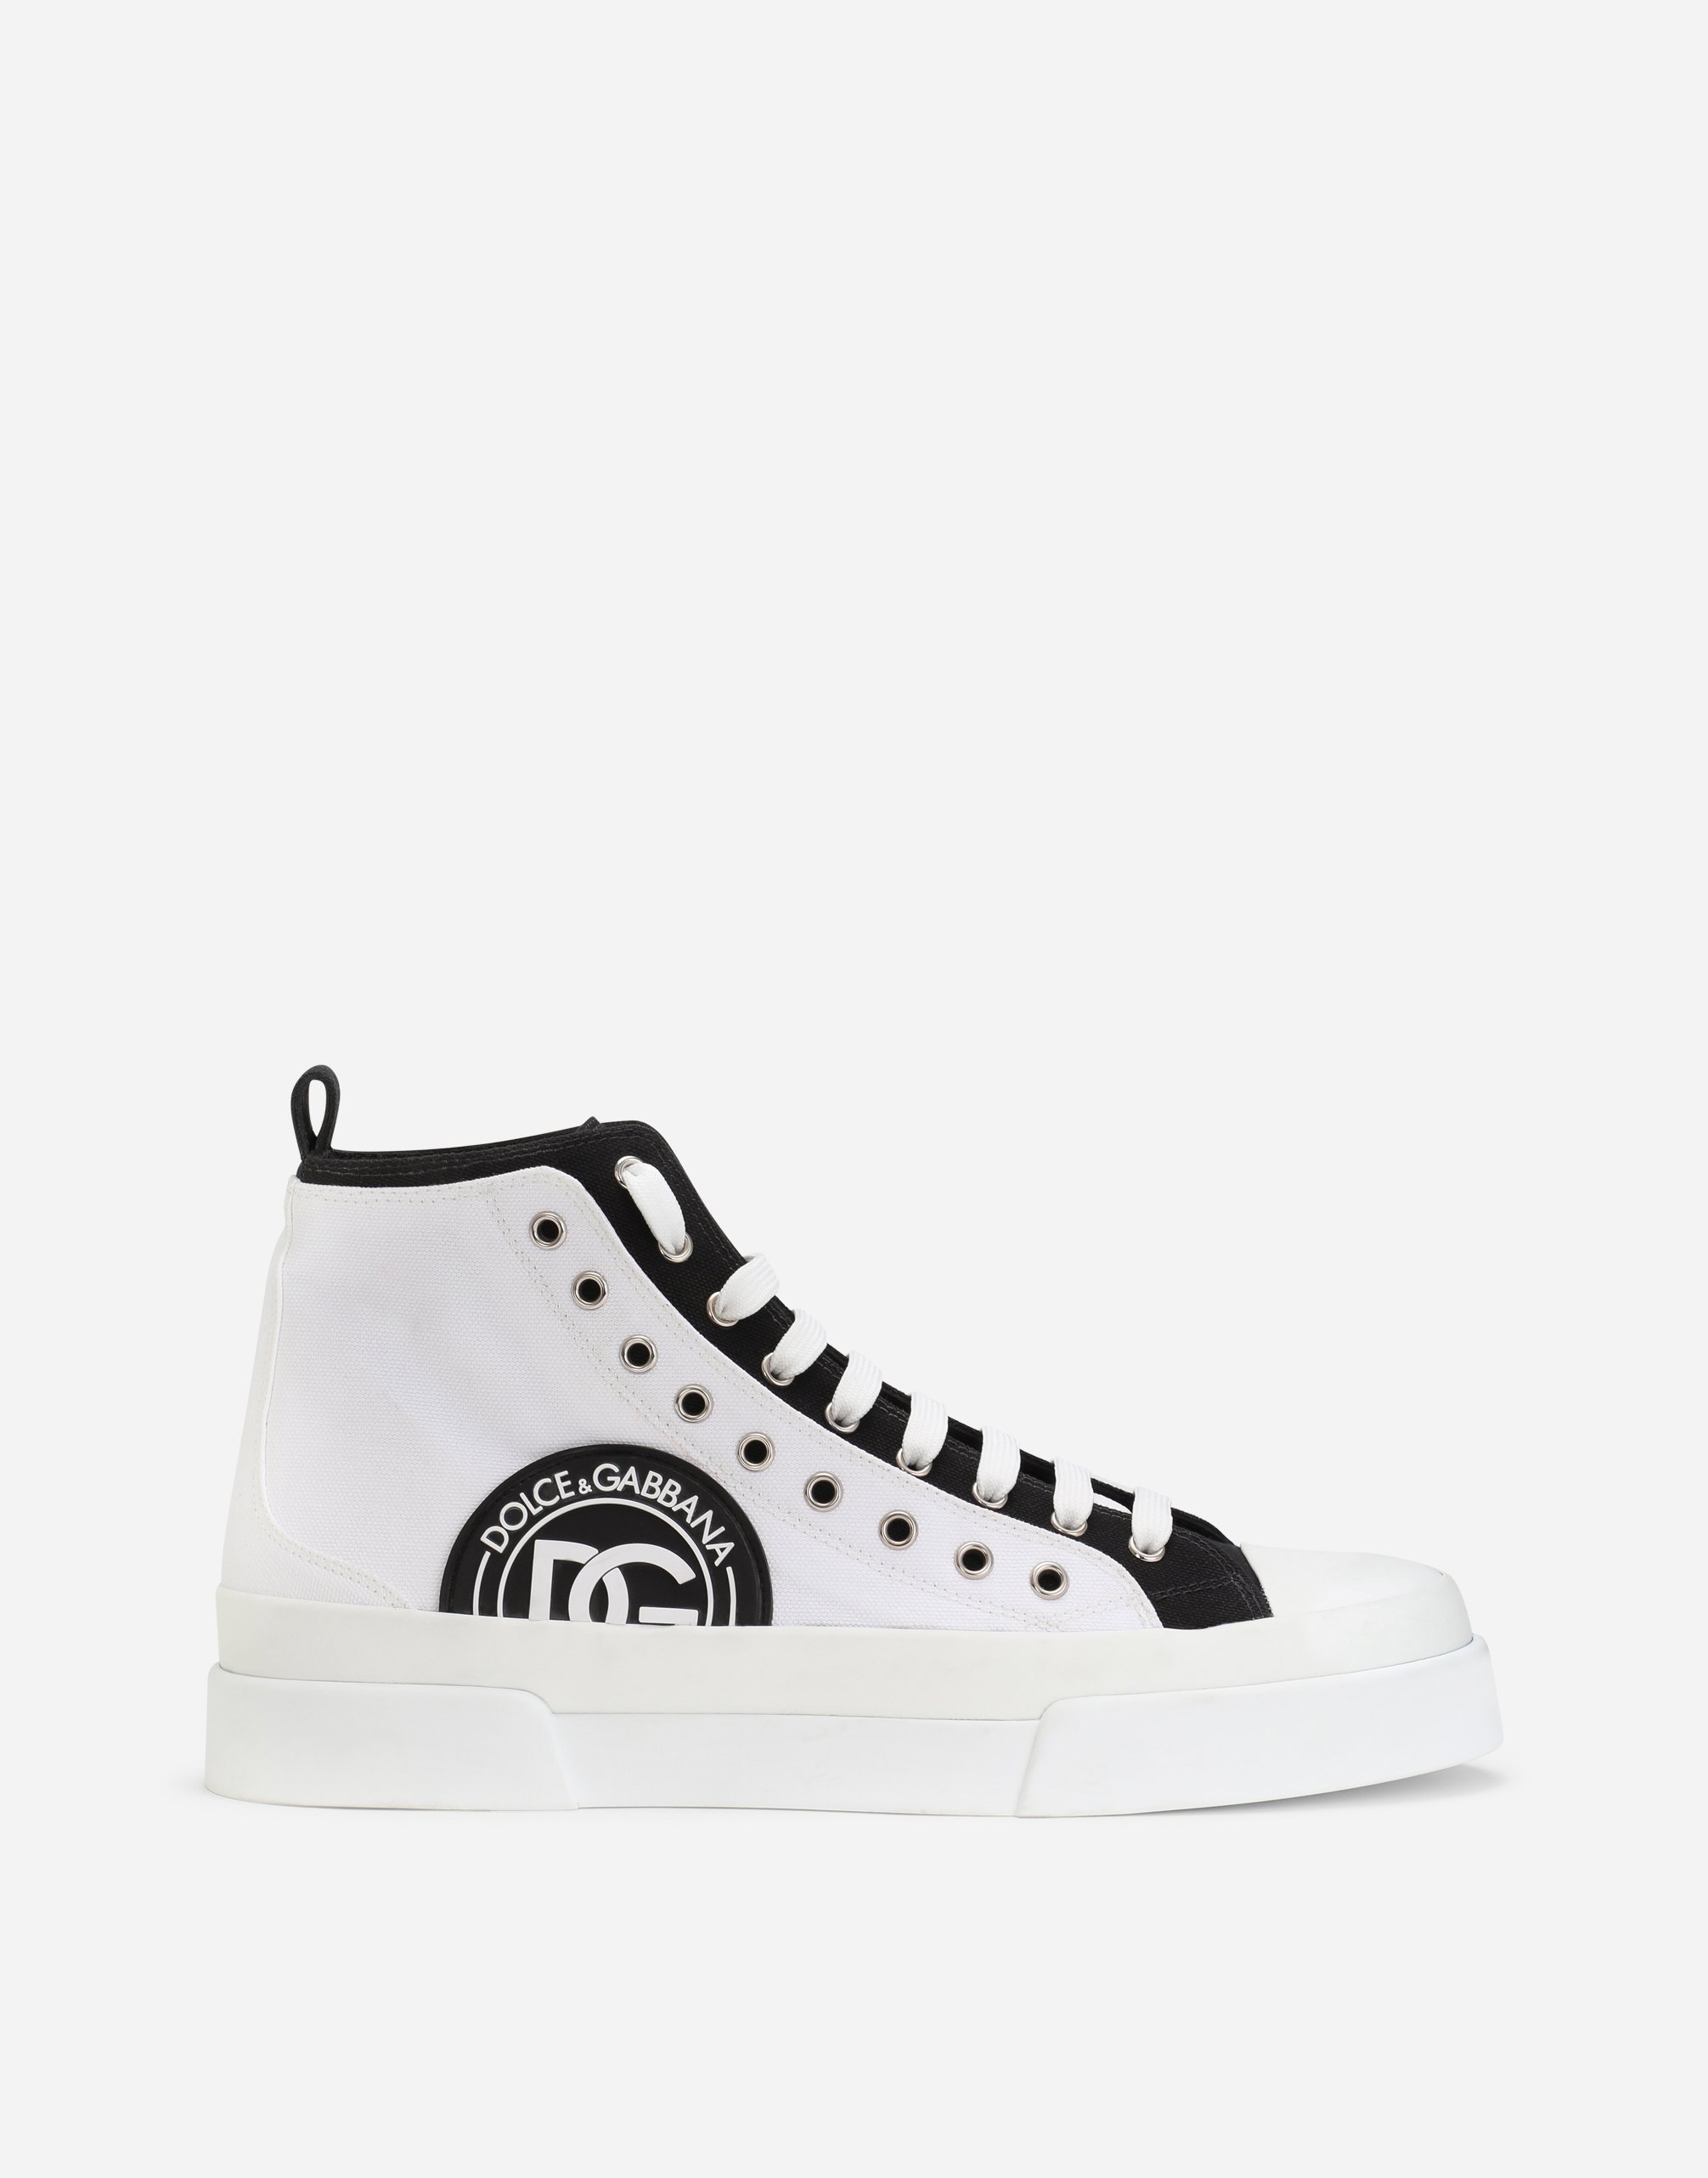 Two-tone canvas Portofino Light mid-top sneakers with DG logo in White/Black